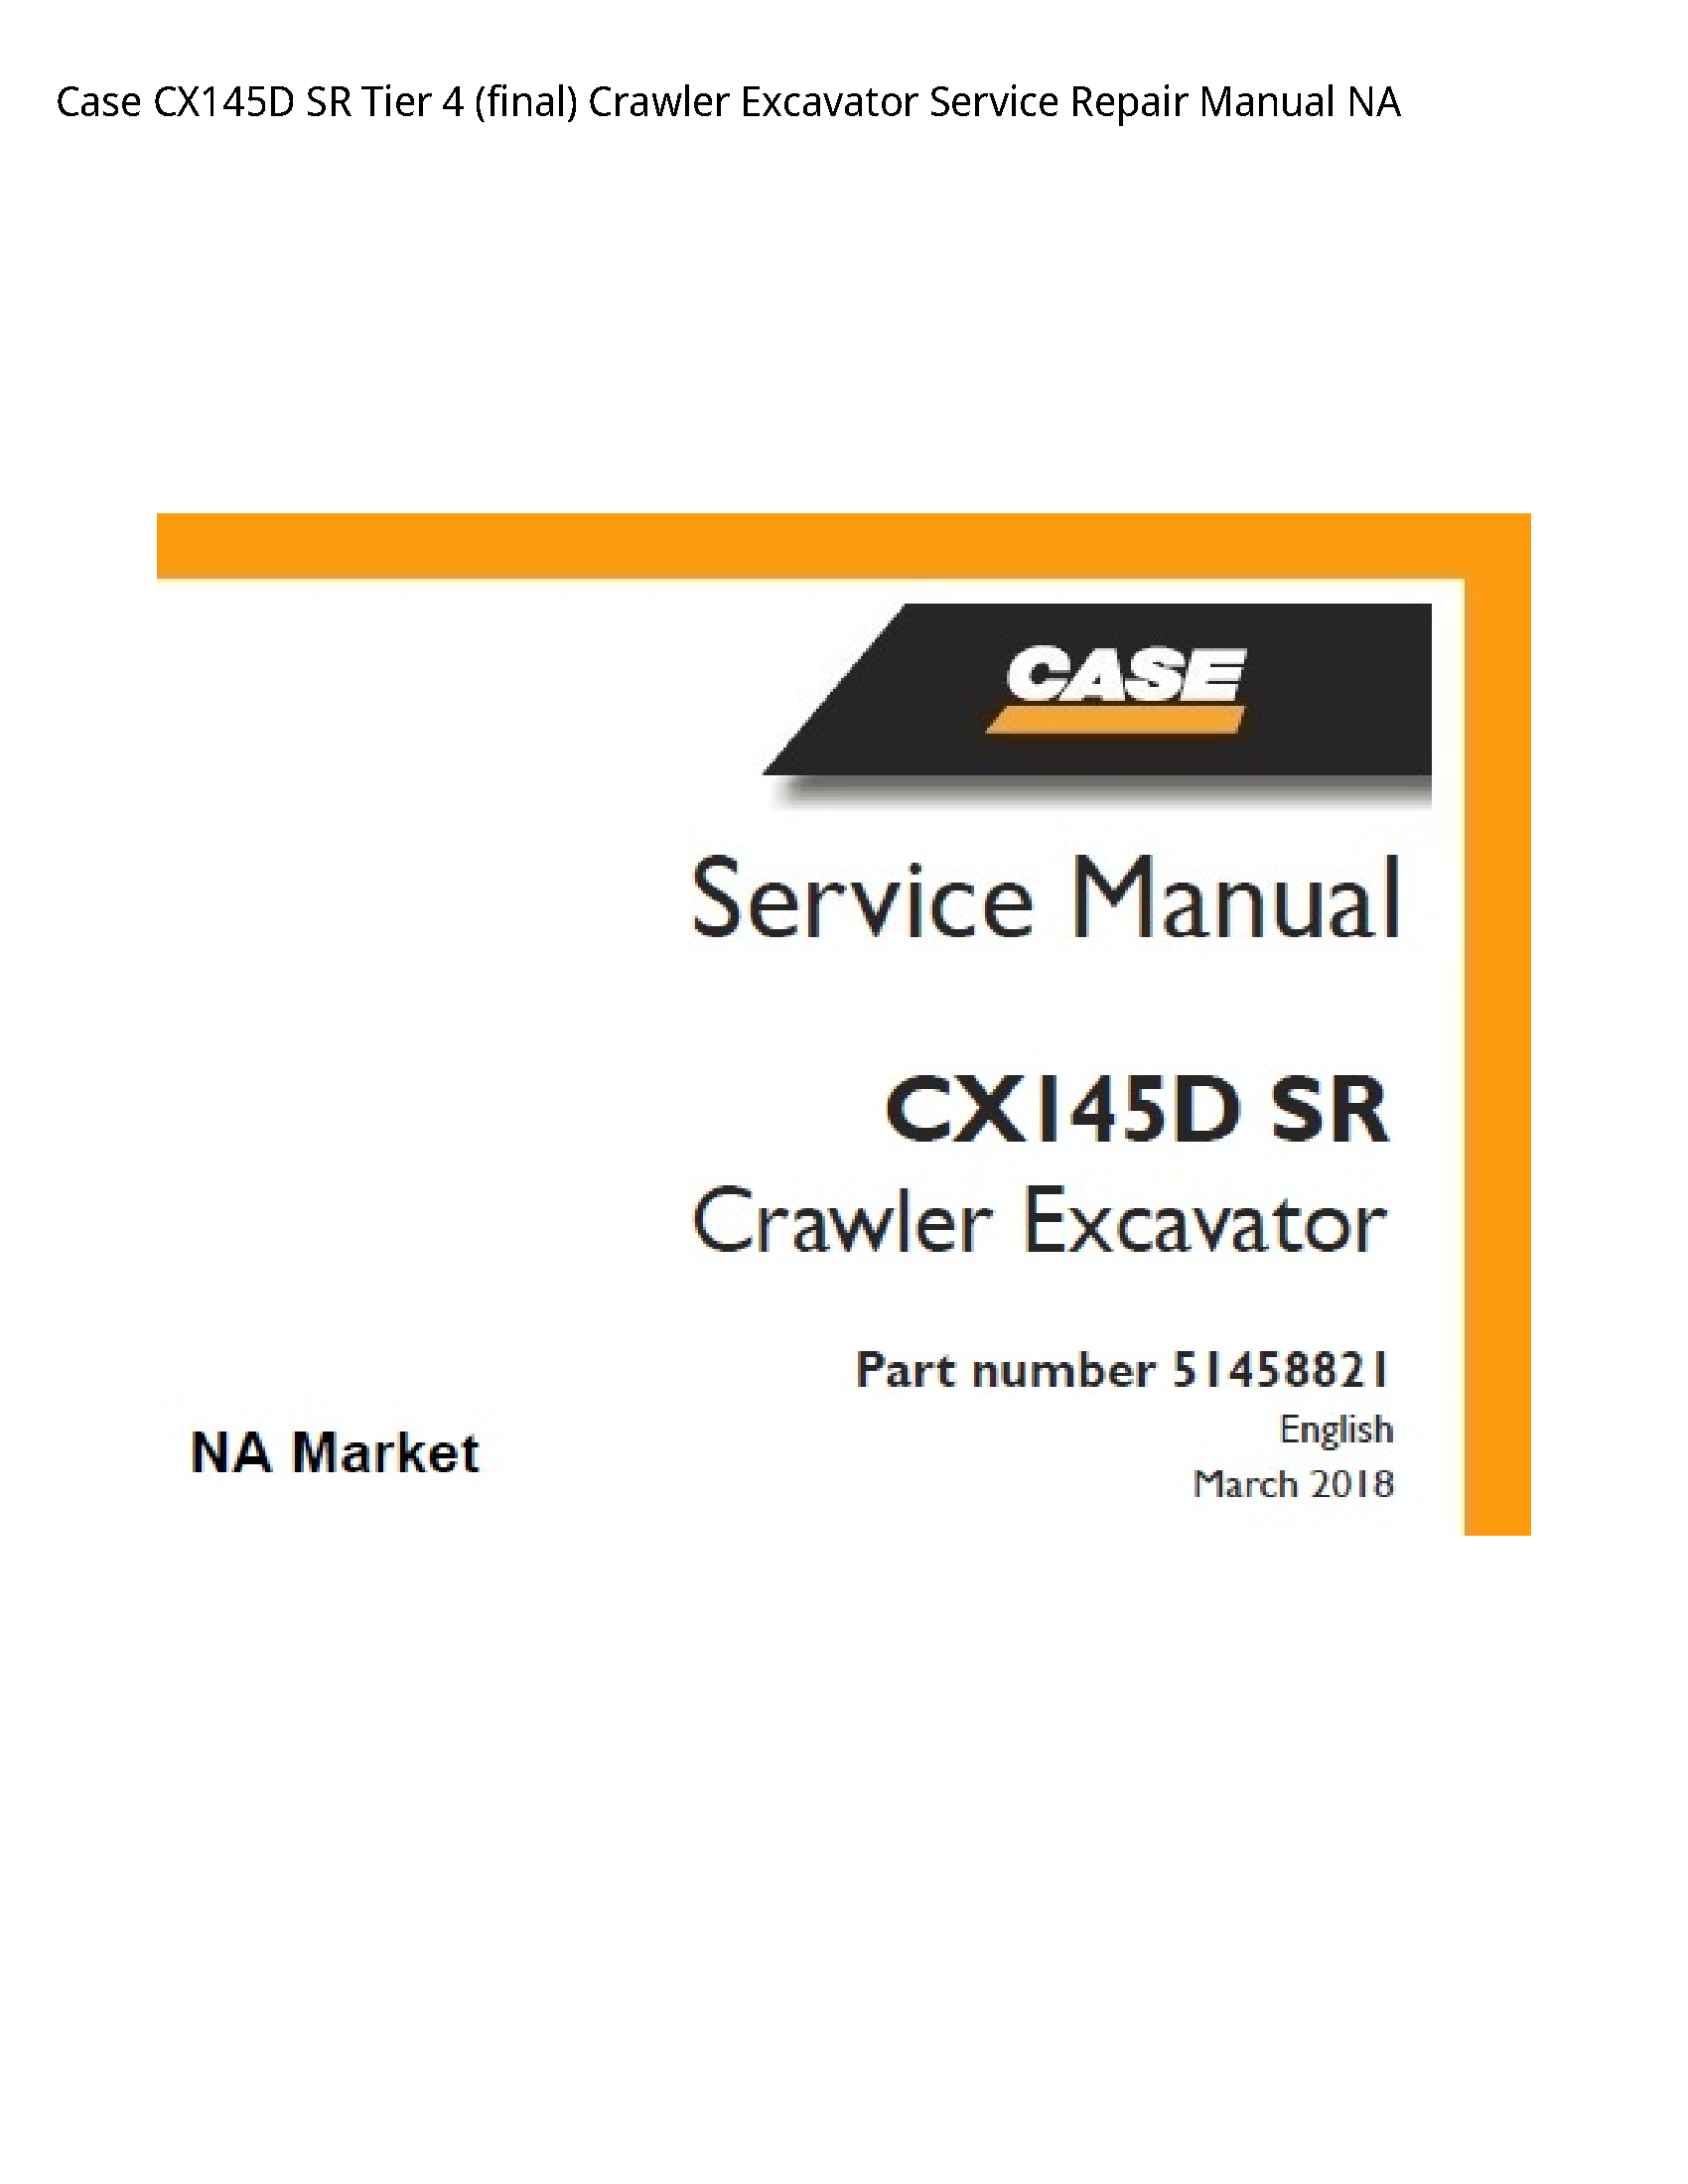 Case/Case IH CX145D SR Tier (final) Crawler Excavator manual